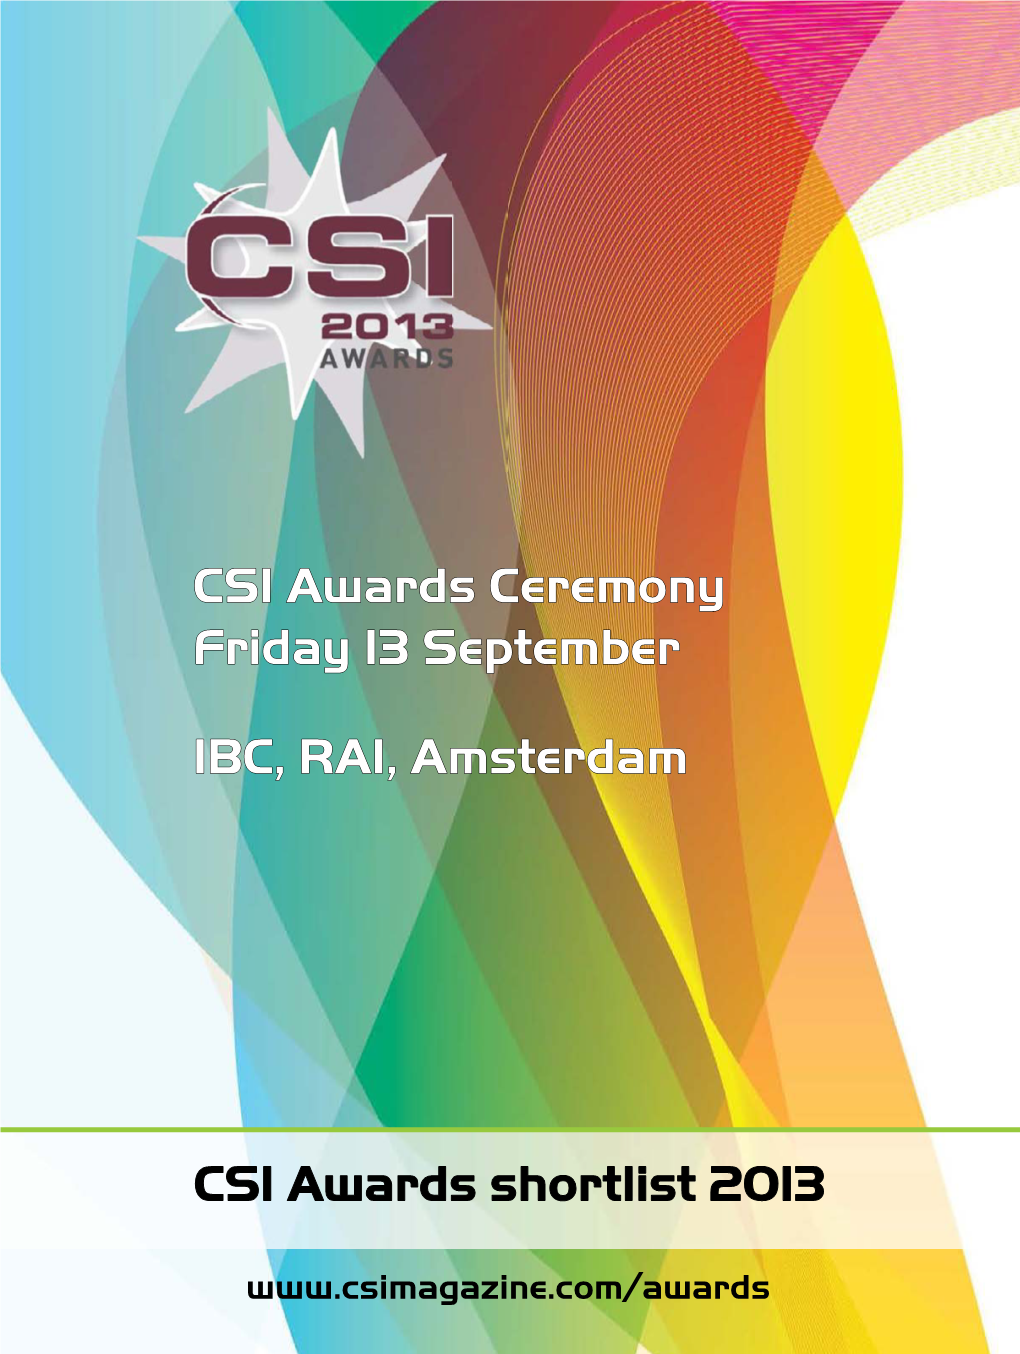 CSI Awards Shortlist 2013 CSI Awards Ceremony Friday 13 September IBC, RAI, Amsterdam